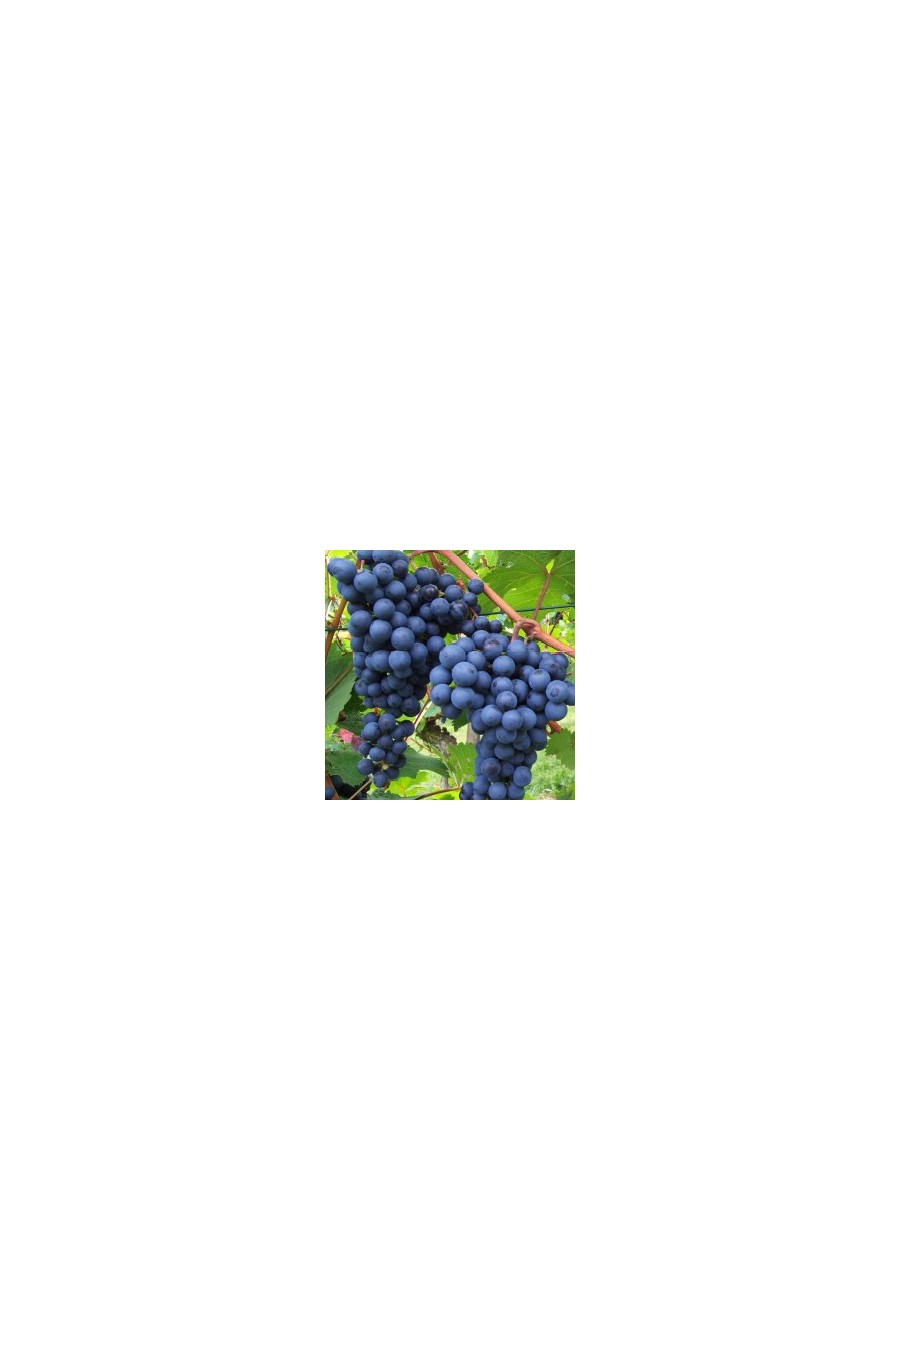 Uva Moscat Blue